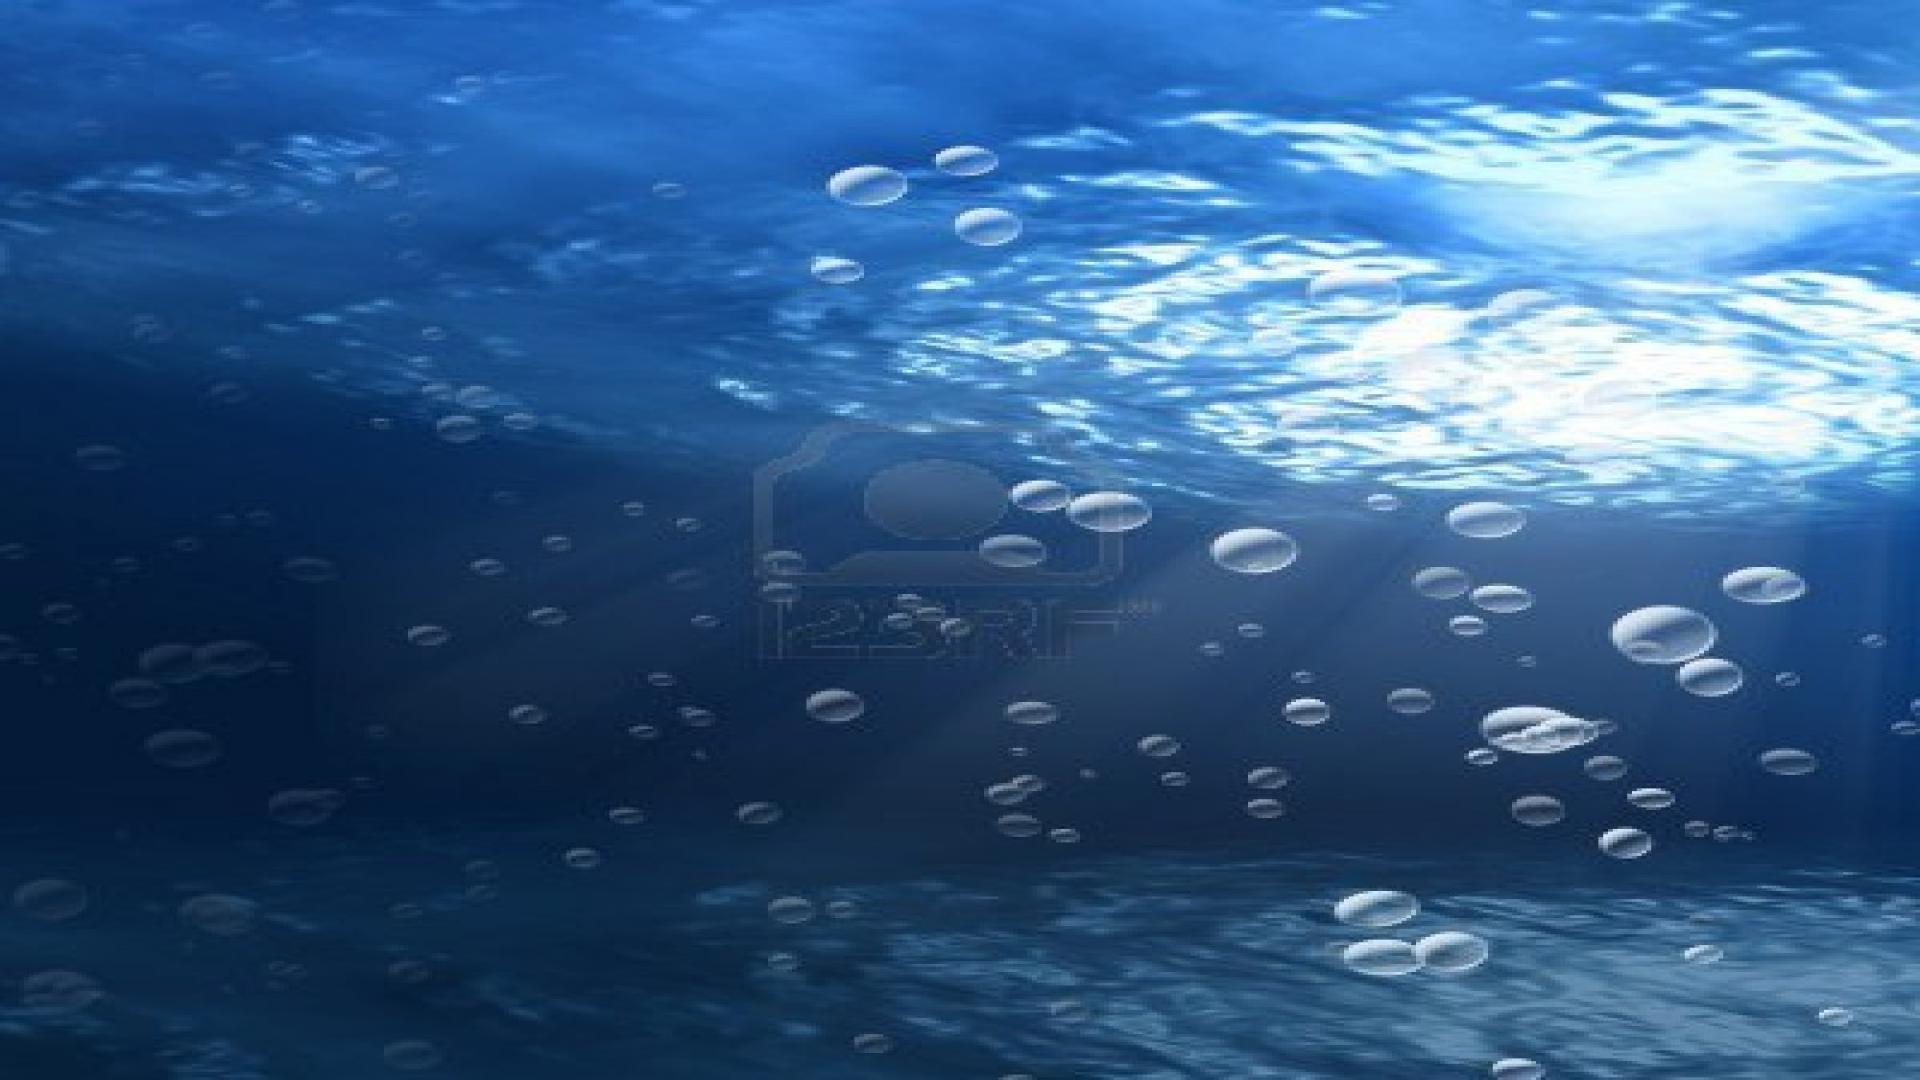 [33+] Underwater HD Wallpapers 1920x1080 - WallpaperSafari